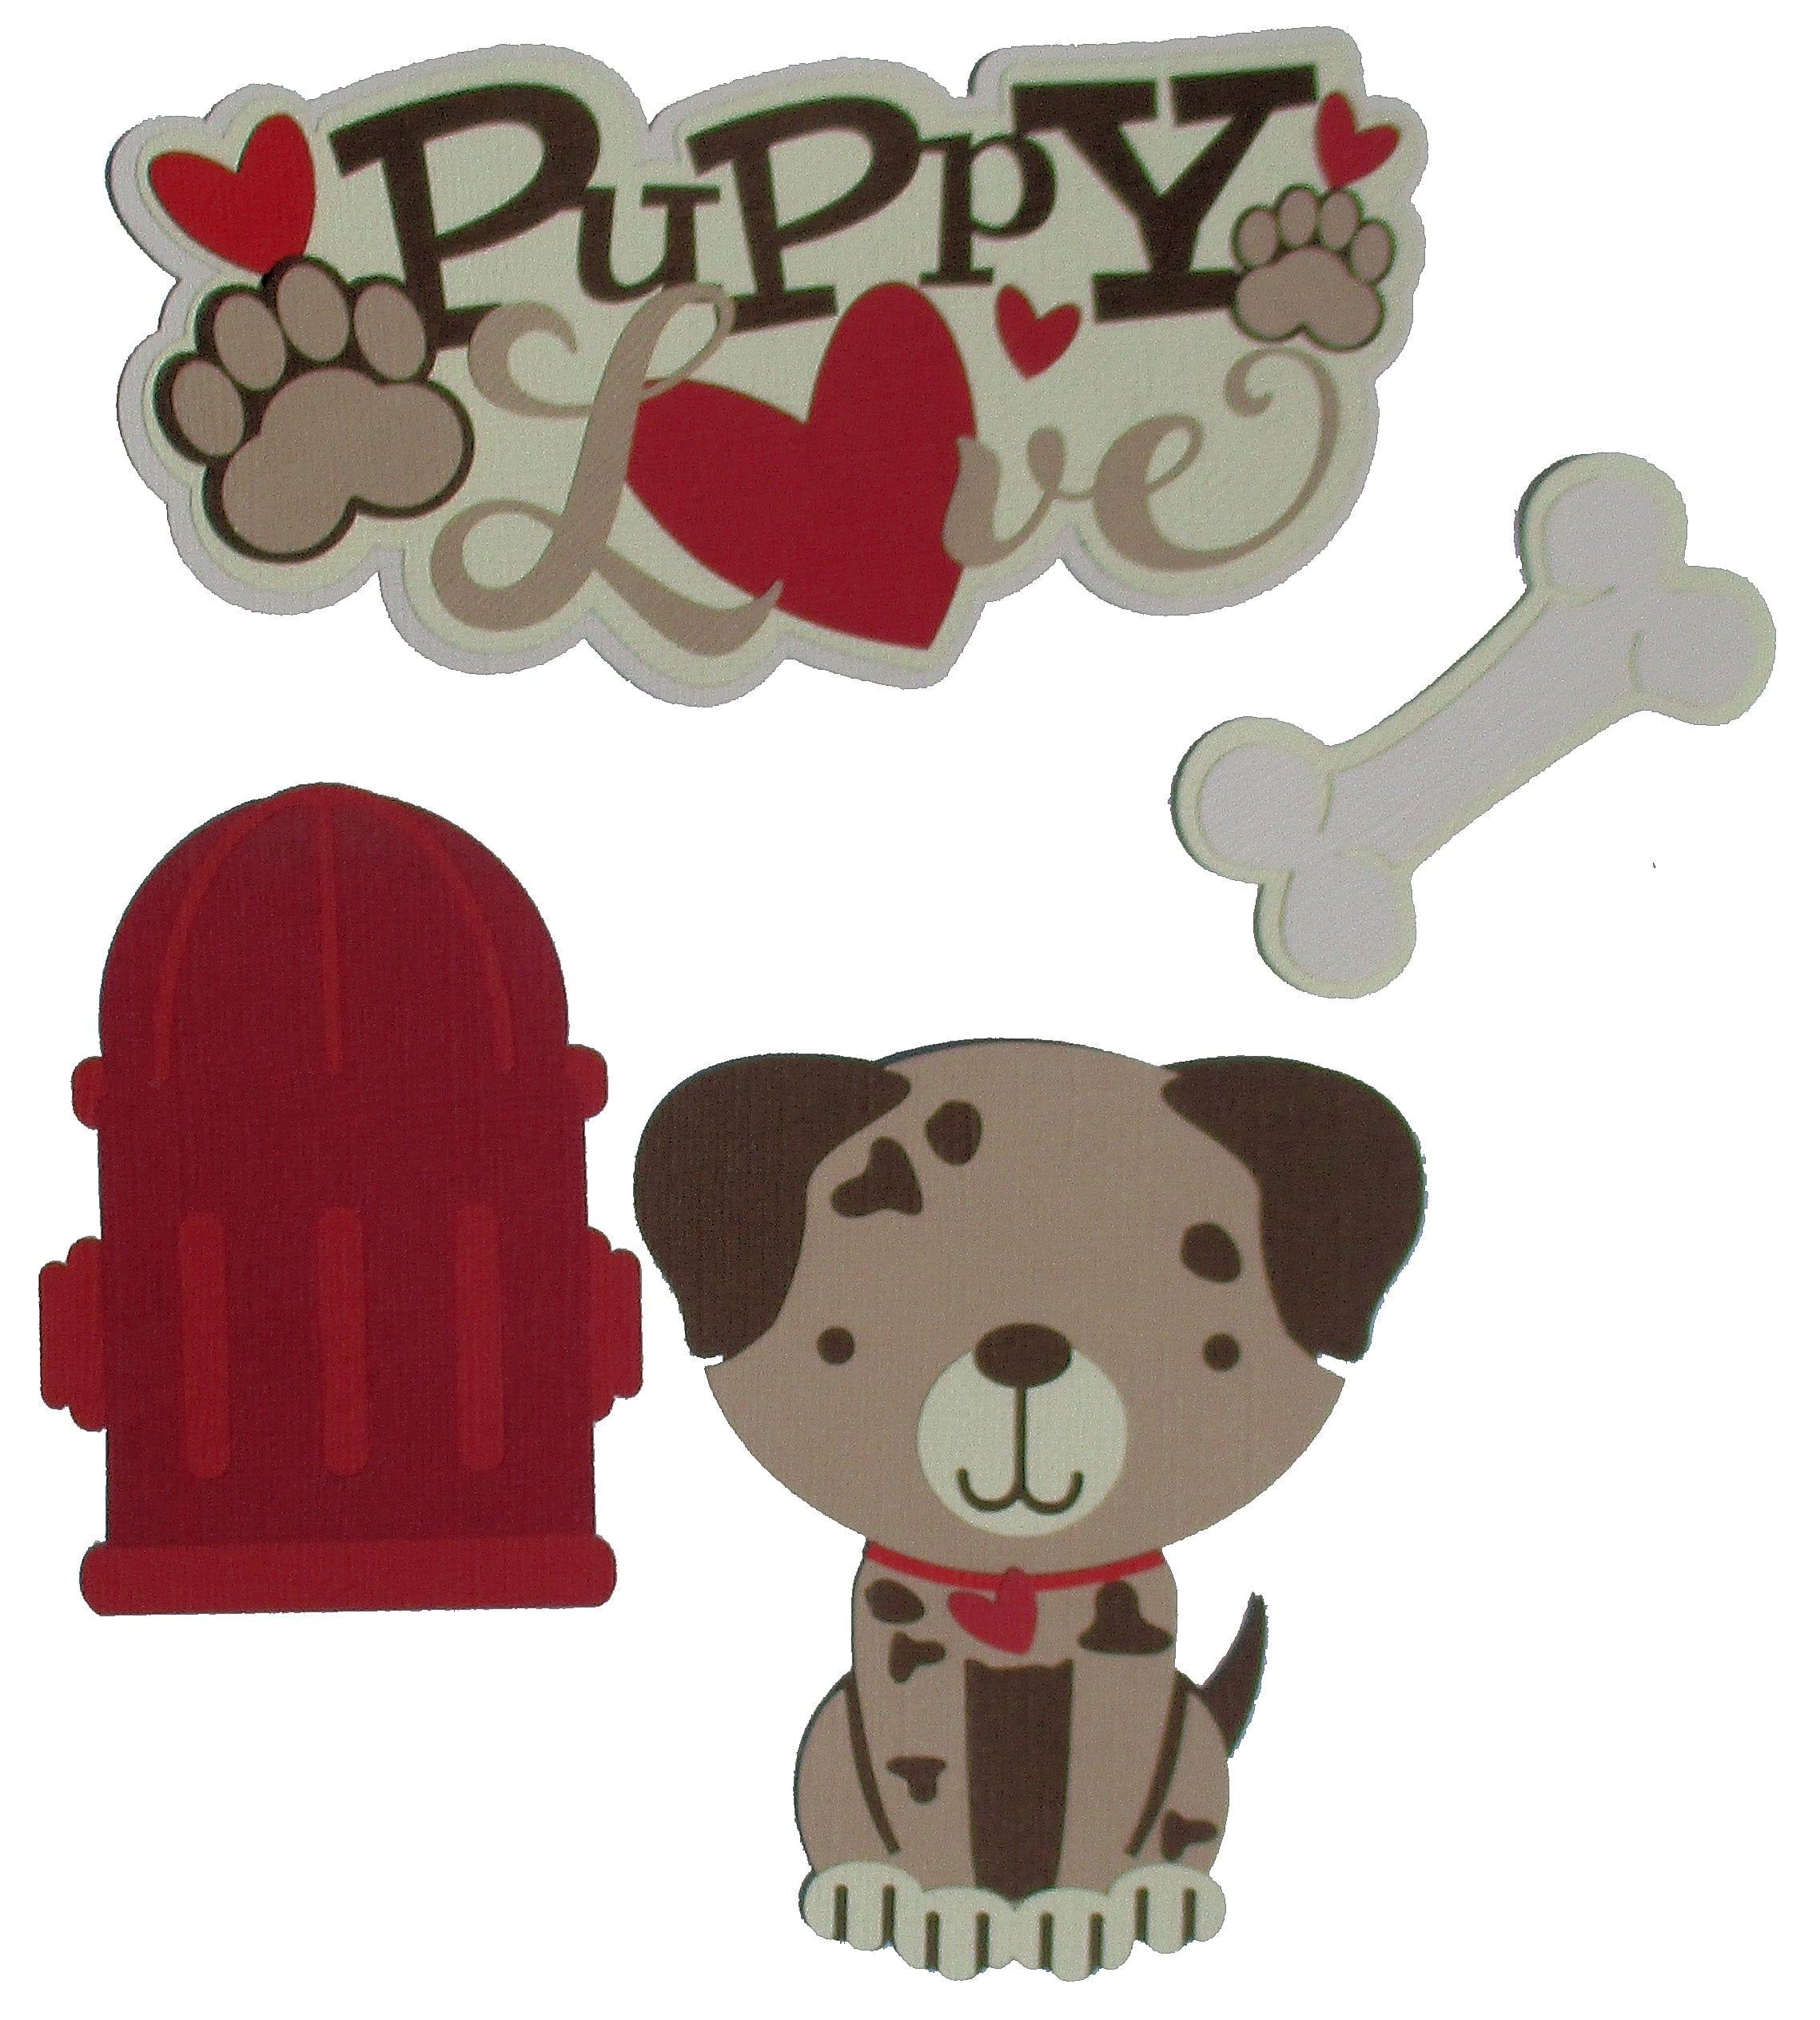 Puppy Love Title & Accessories 4-Piece Laser Cut Scrapbook Embellishments by SSC Laser Designs